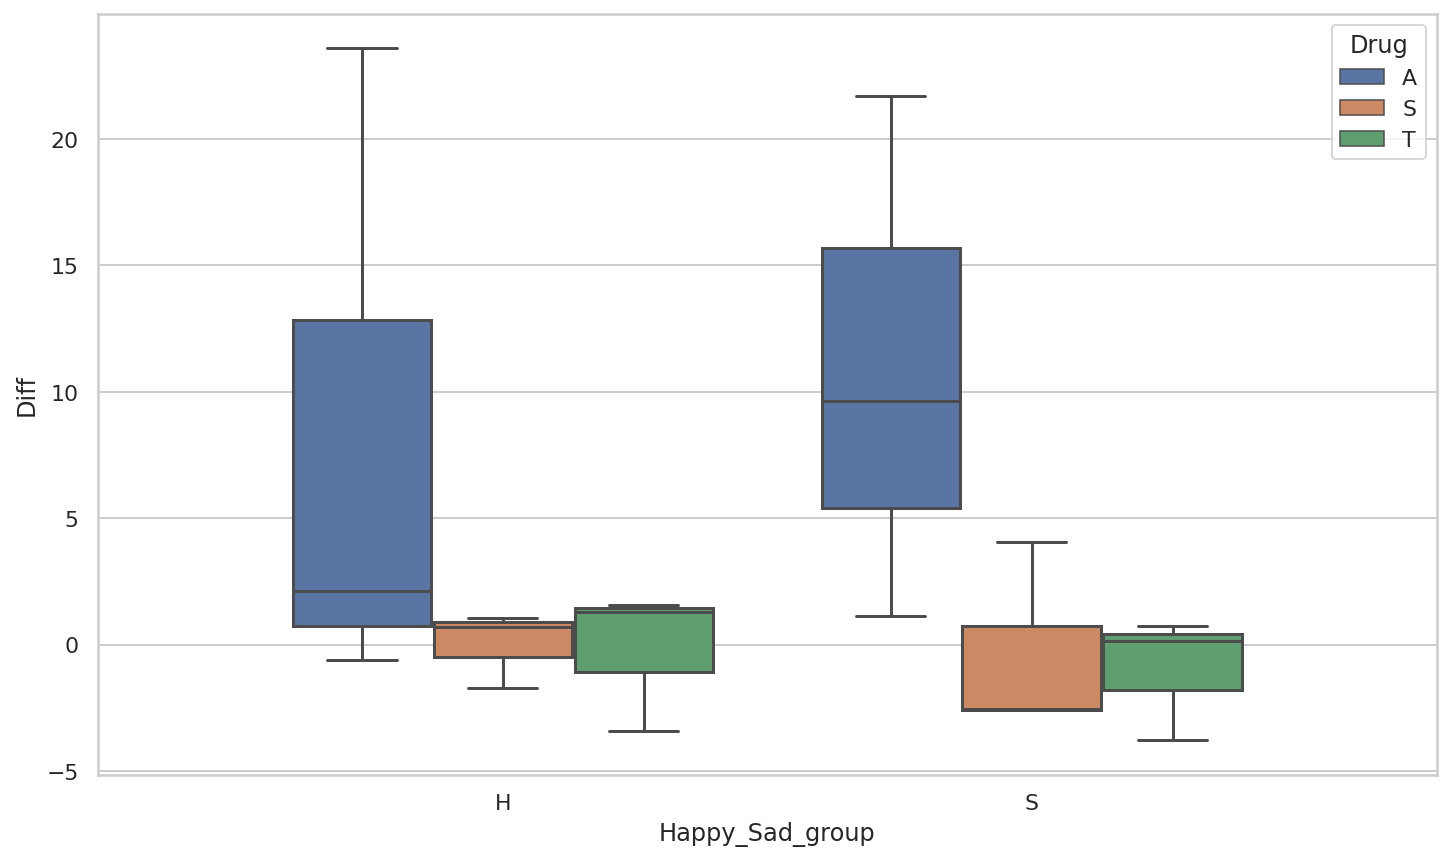 Box Plot of Happy Sad Group vs difference